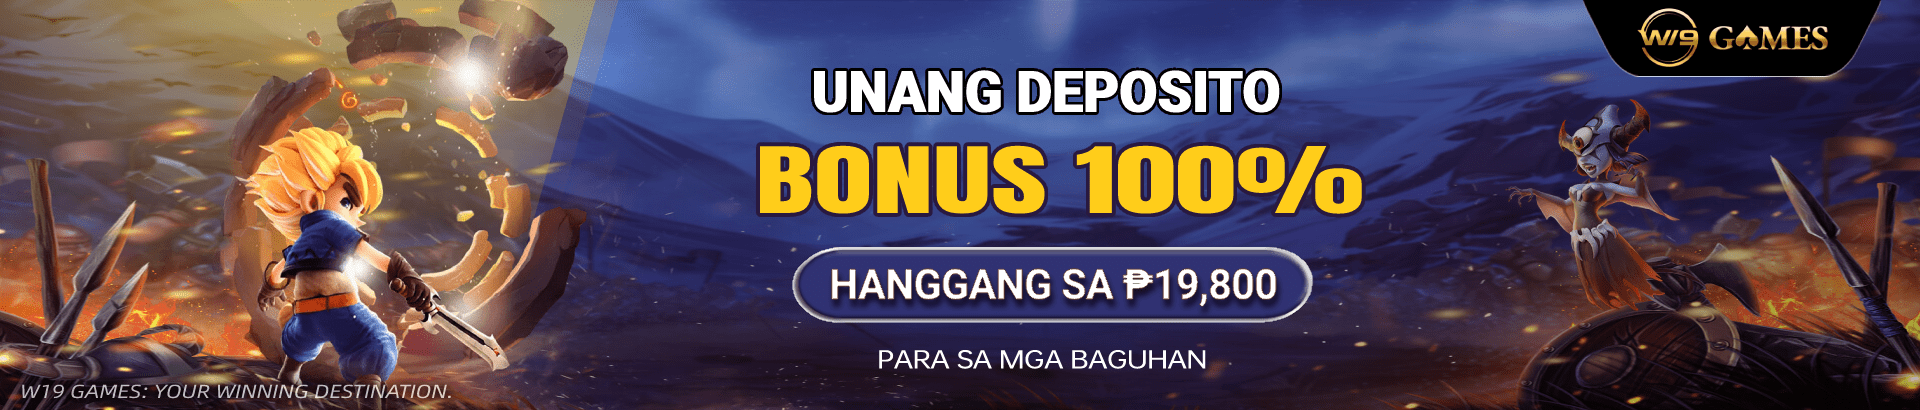 W19 Games - Unang Deposit Bonus 100%